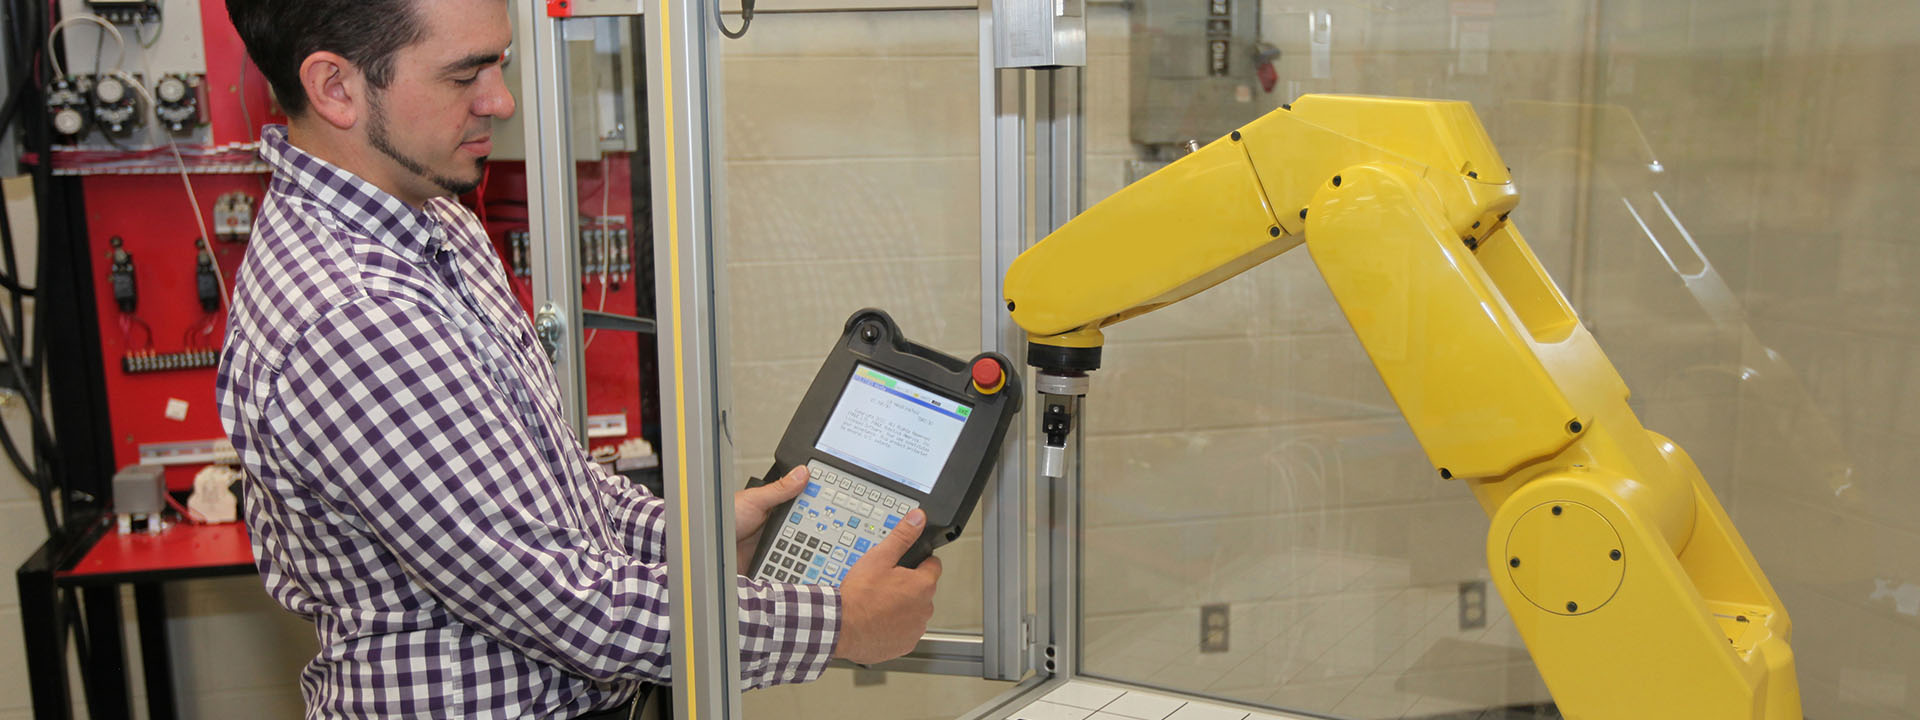 An Instructor calibrates a robotic arm